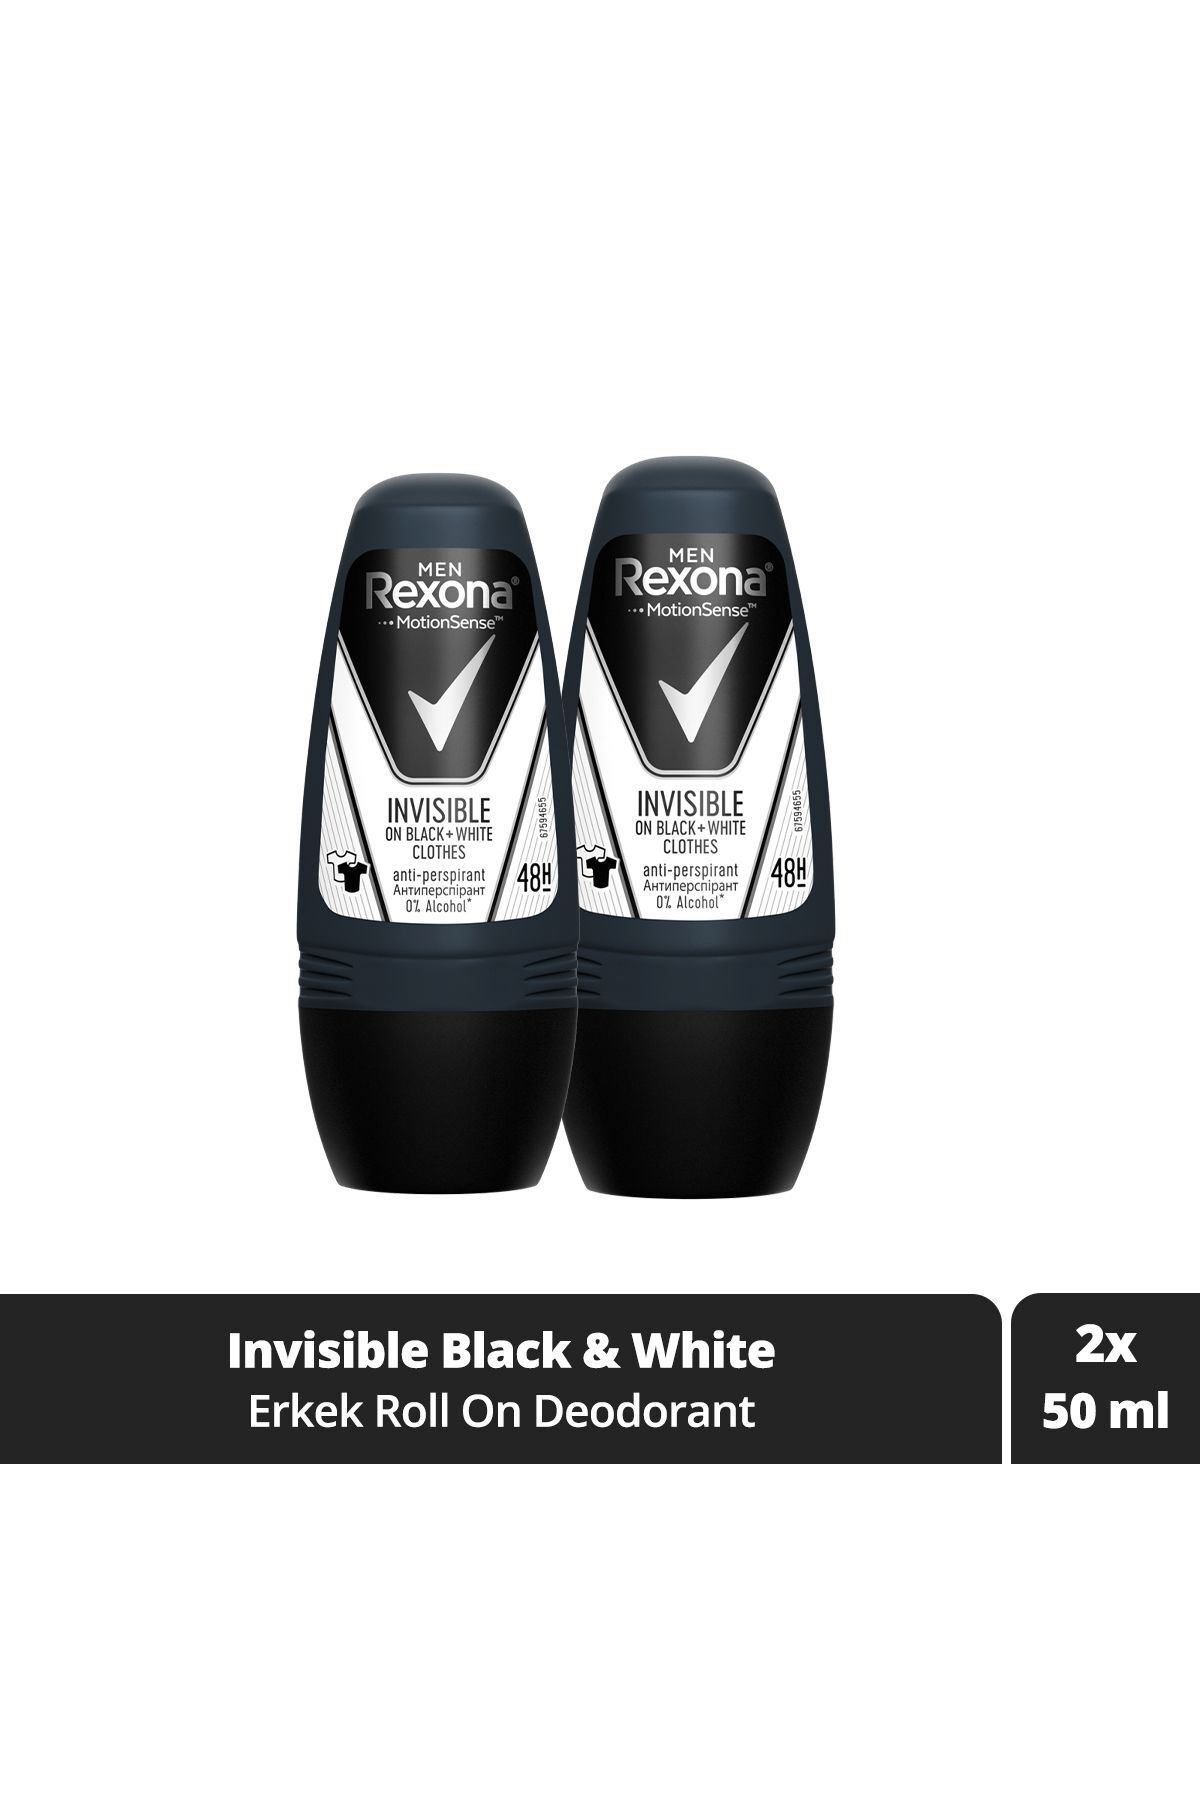 Rexona Men Motionsense Erkek Roll On Deodorant Invisible On Black White Clothes 50 ml X2